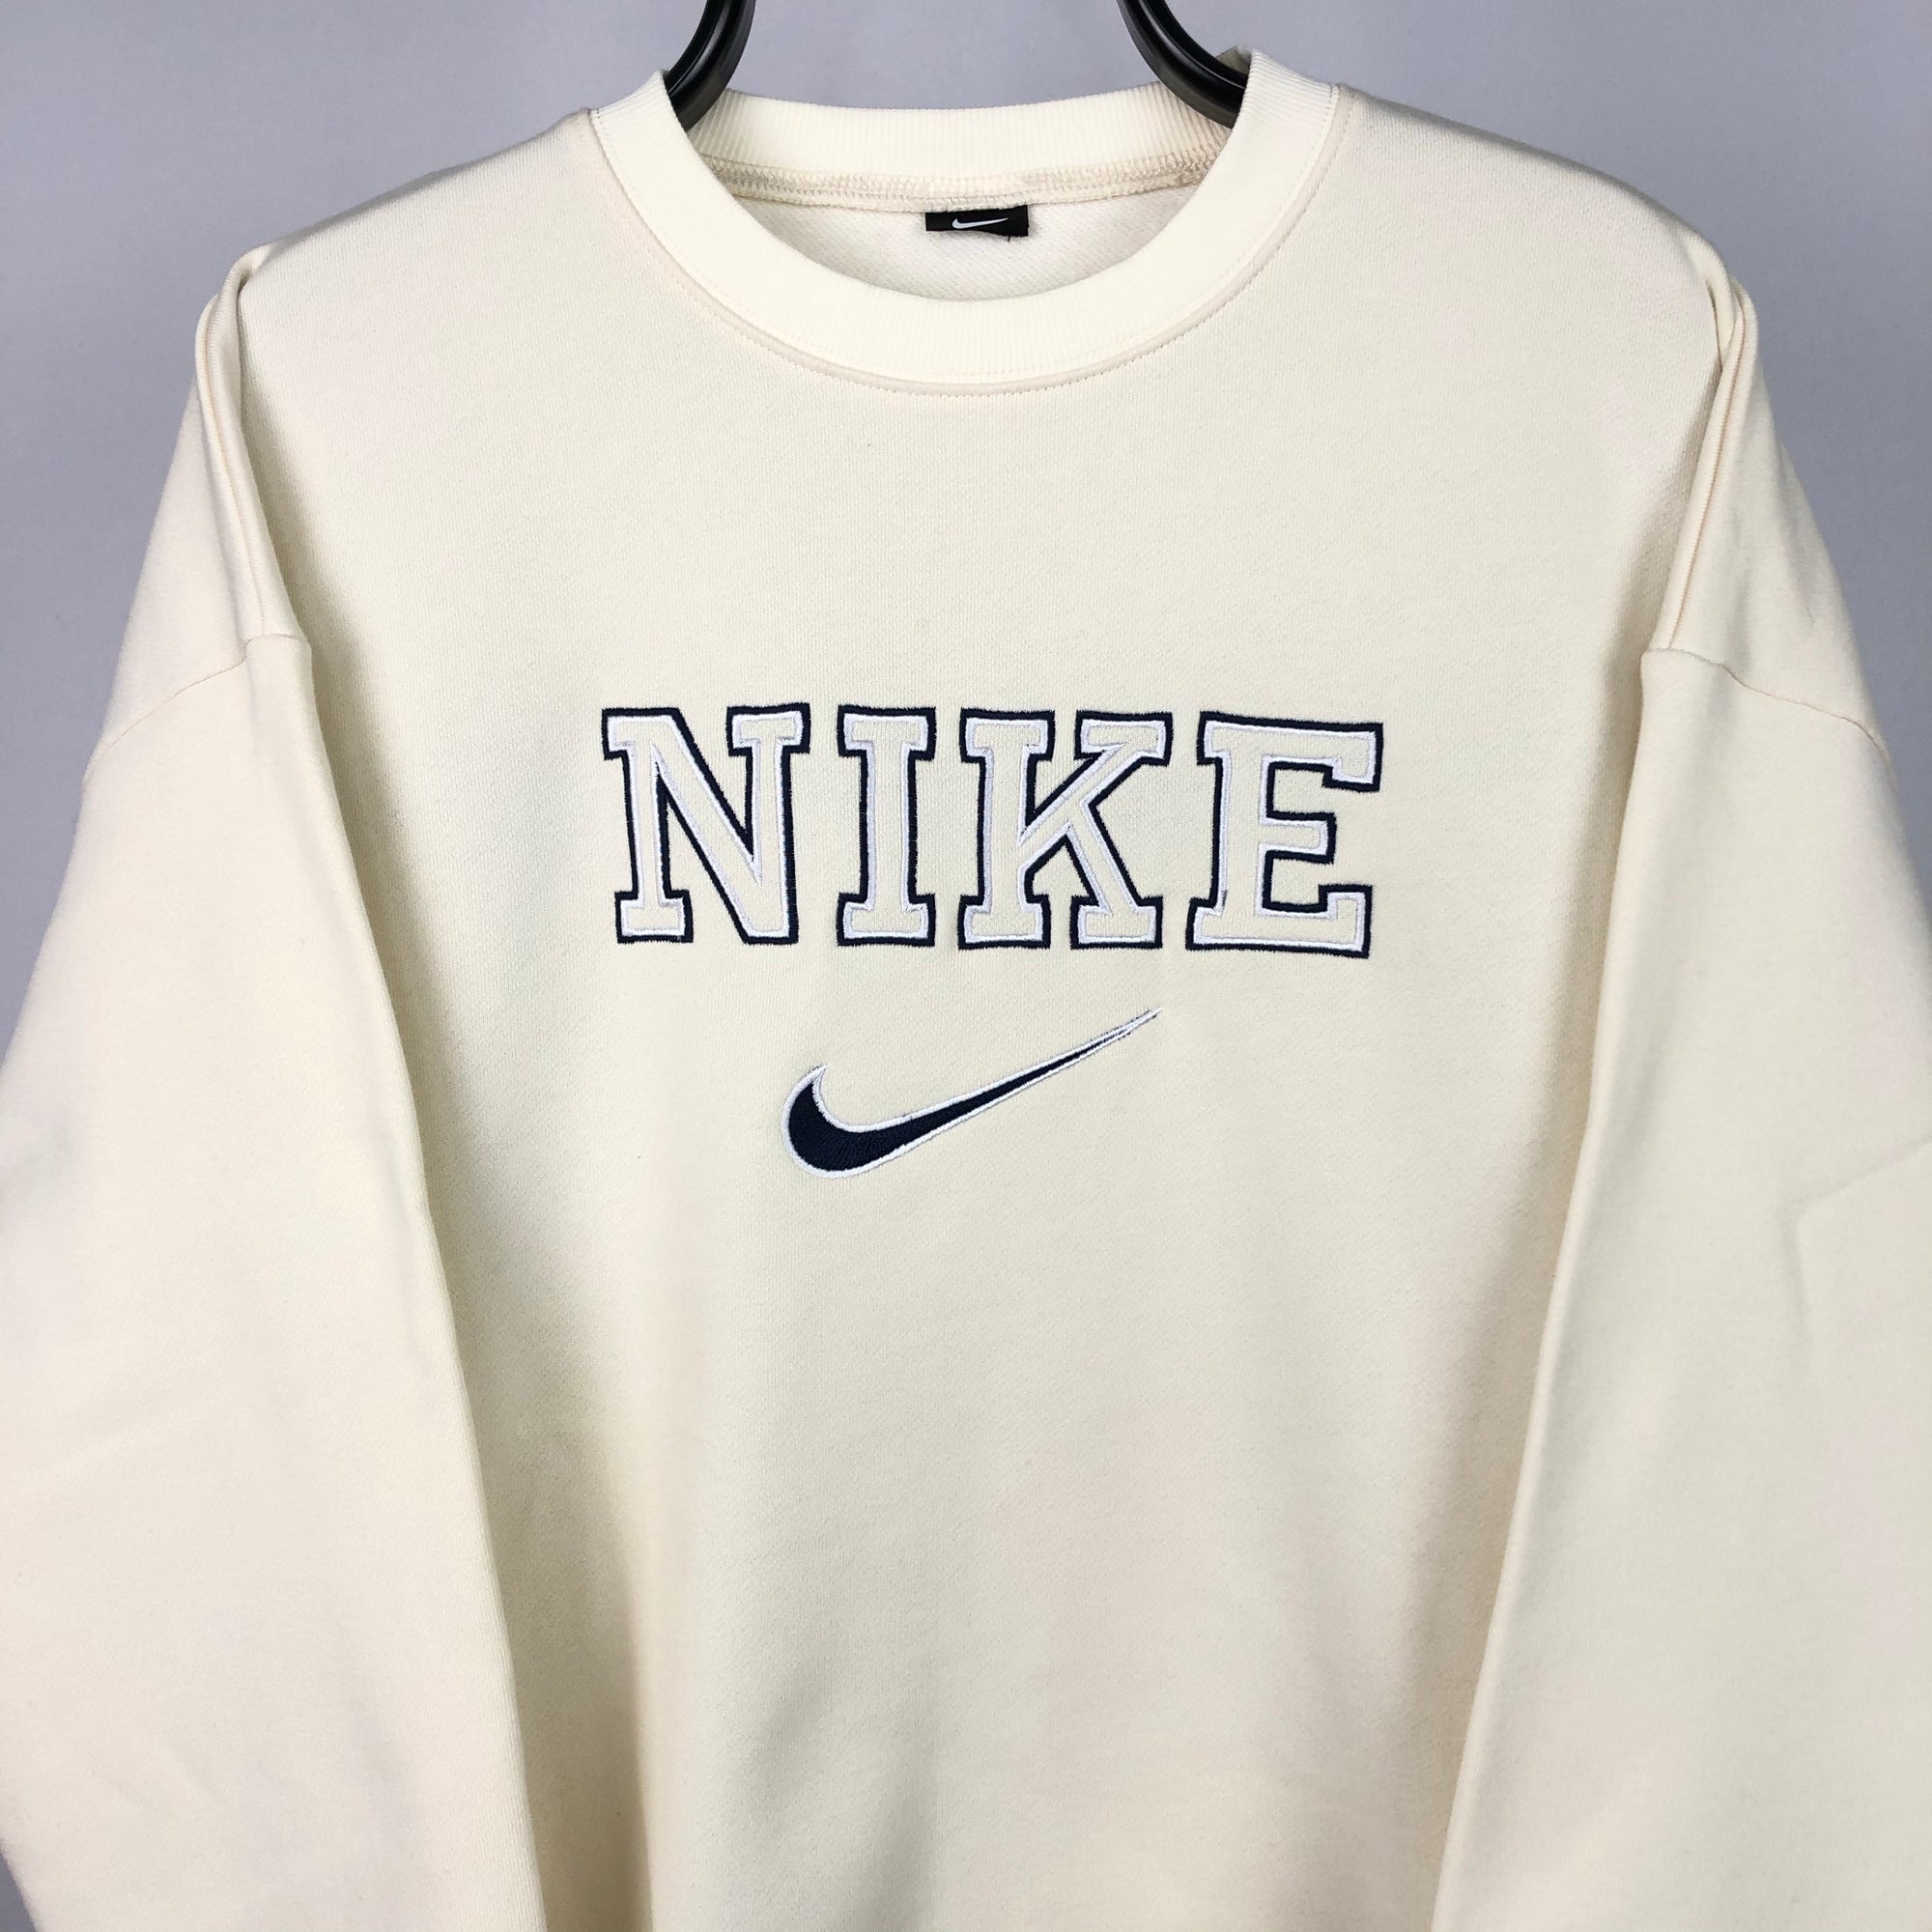 Nike Spellout Sweatshirt in Cream - Men's Large/Women's XL